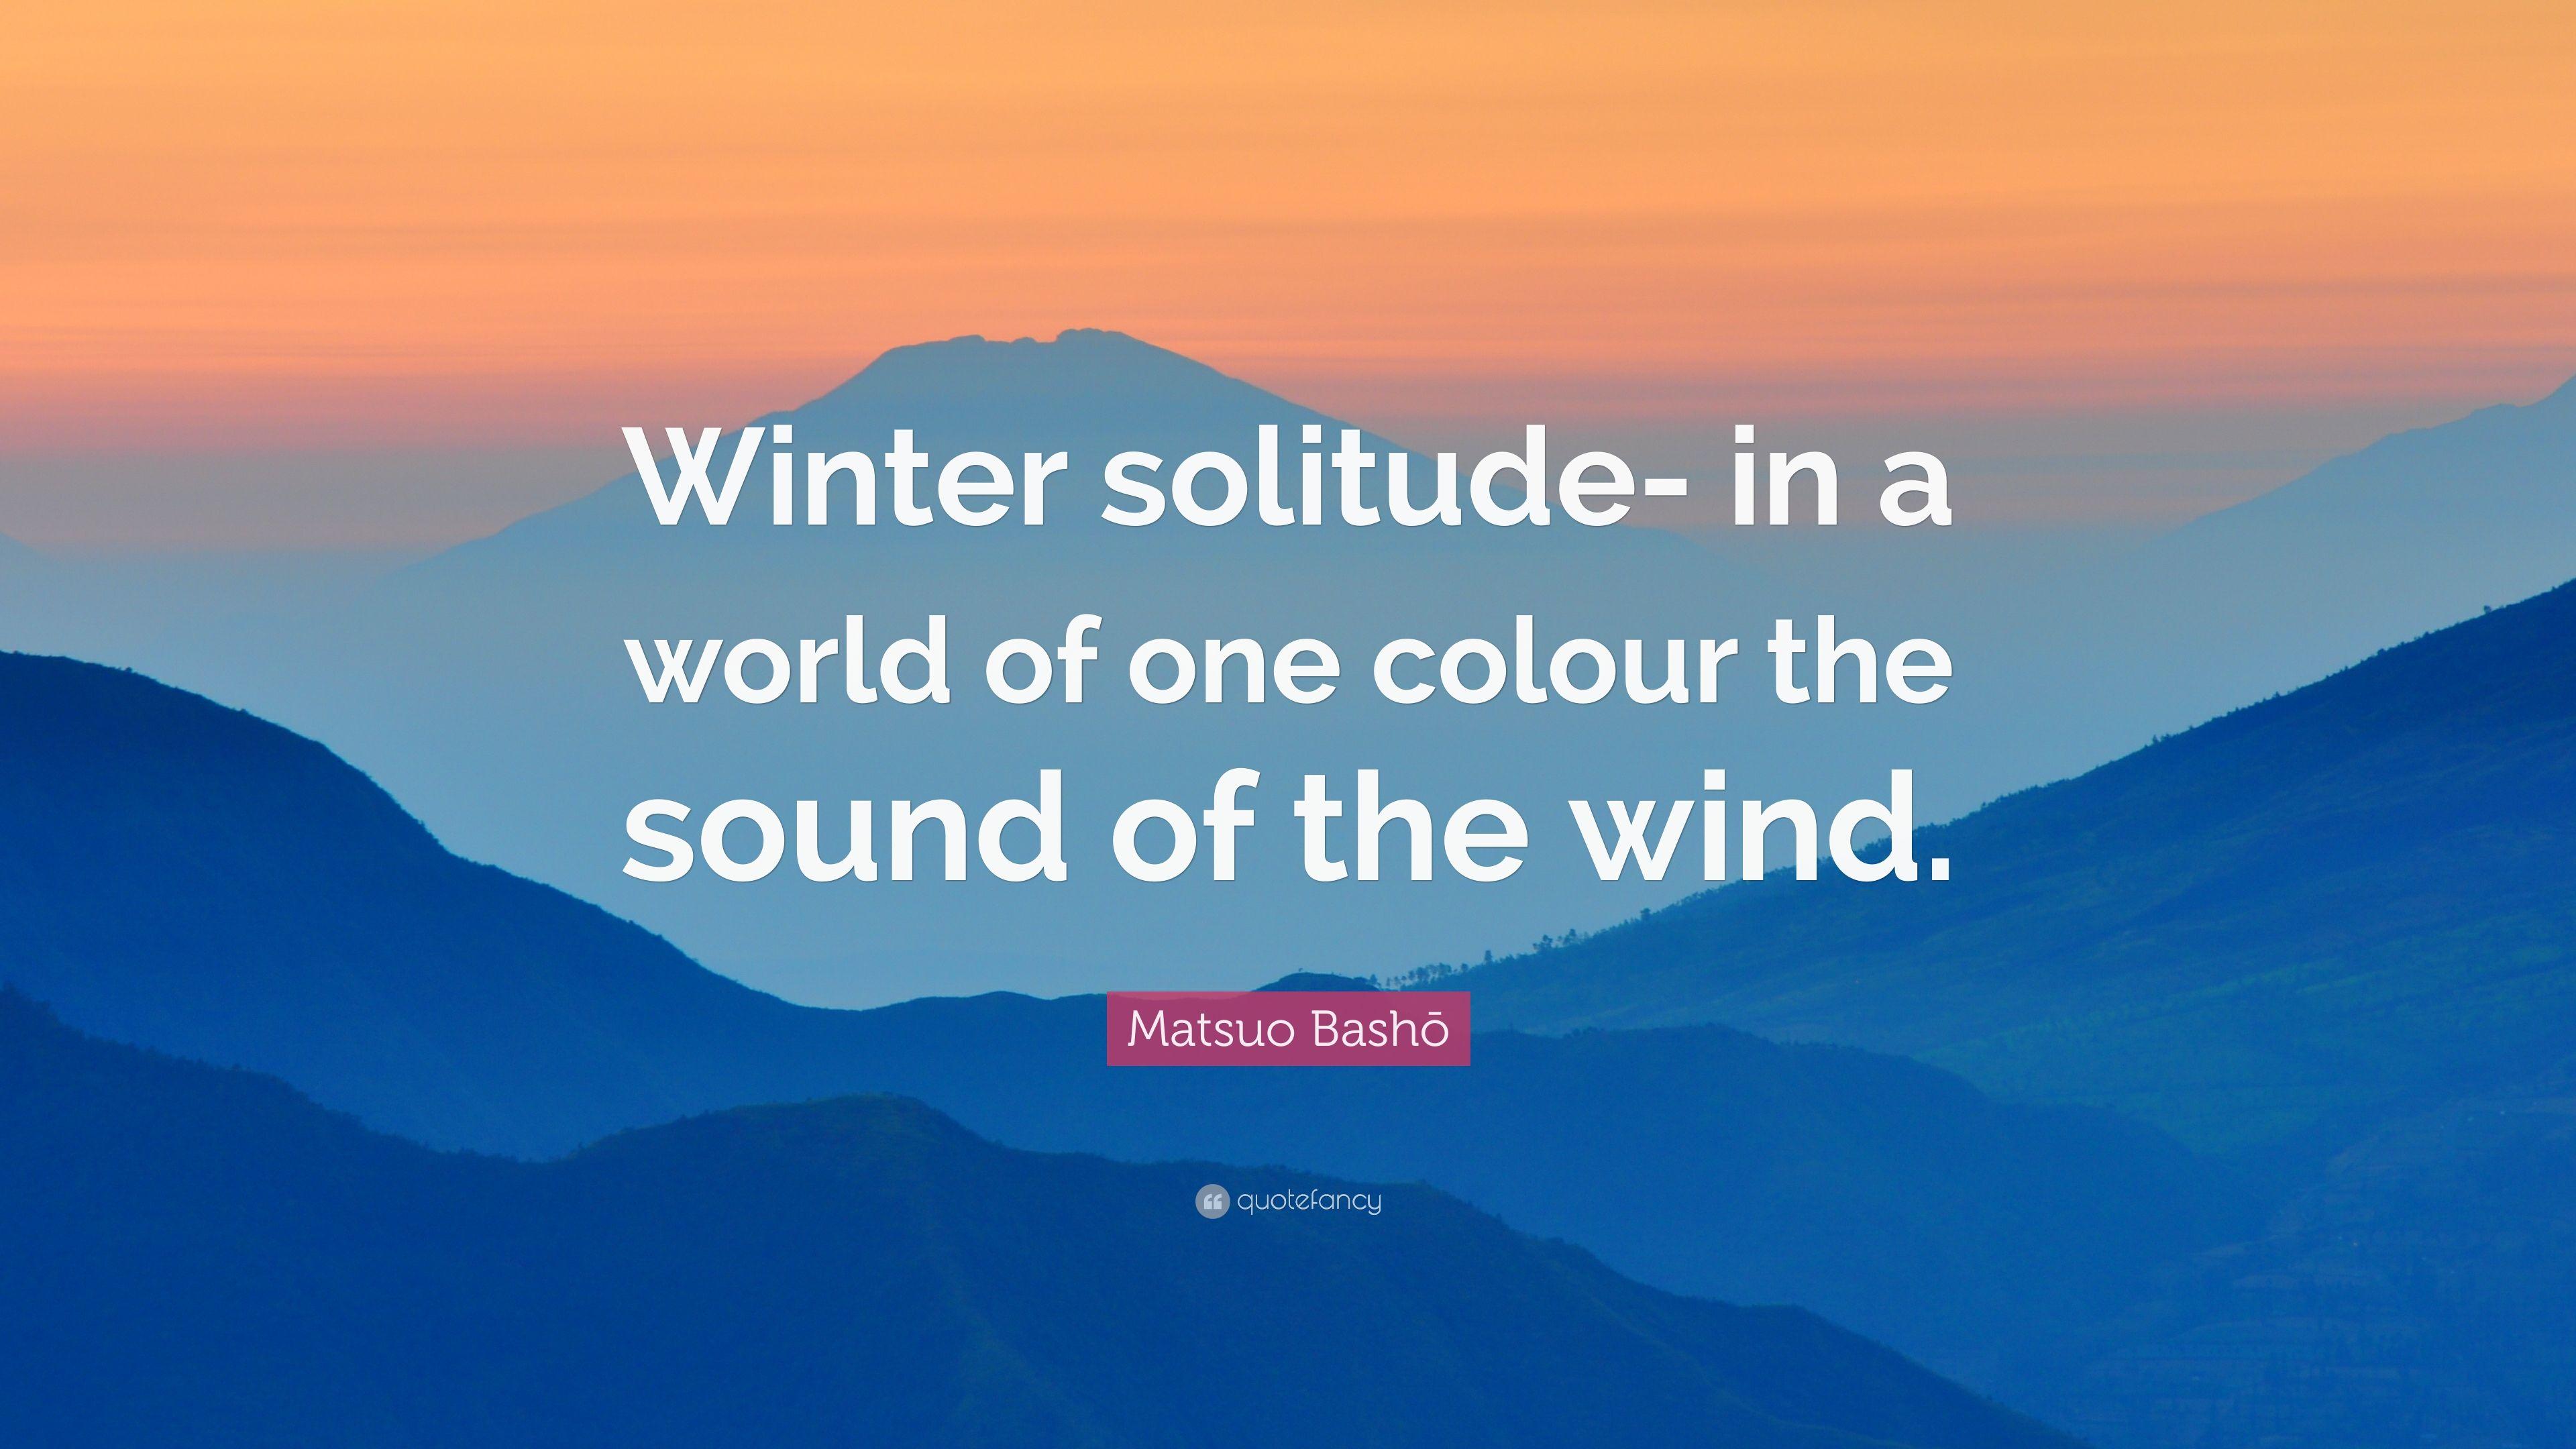 Matsuo Bashō Quote: “Winter solitude- in a world of one